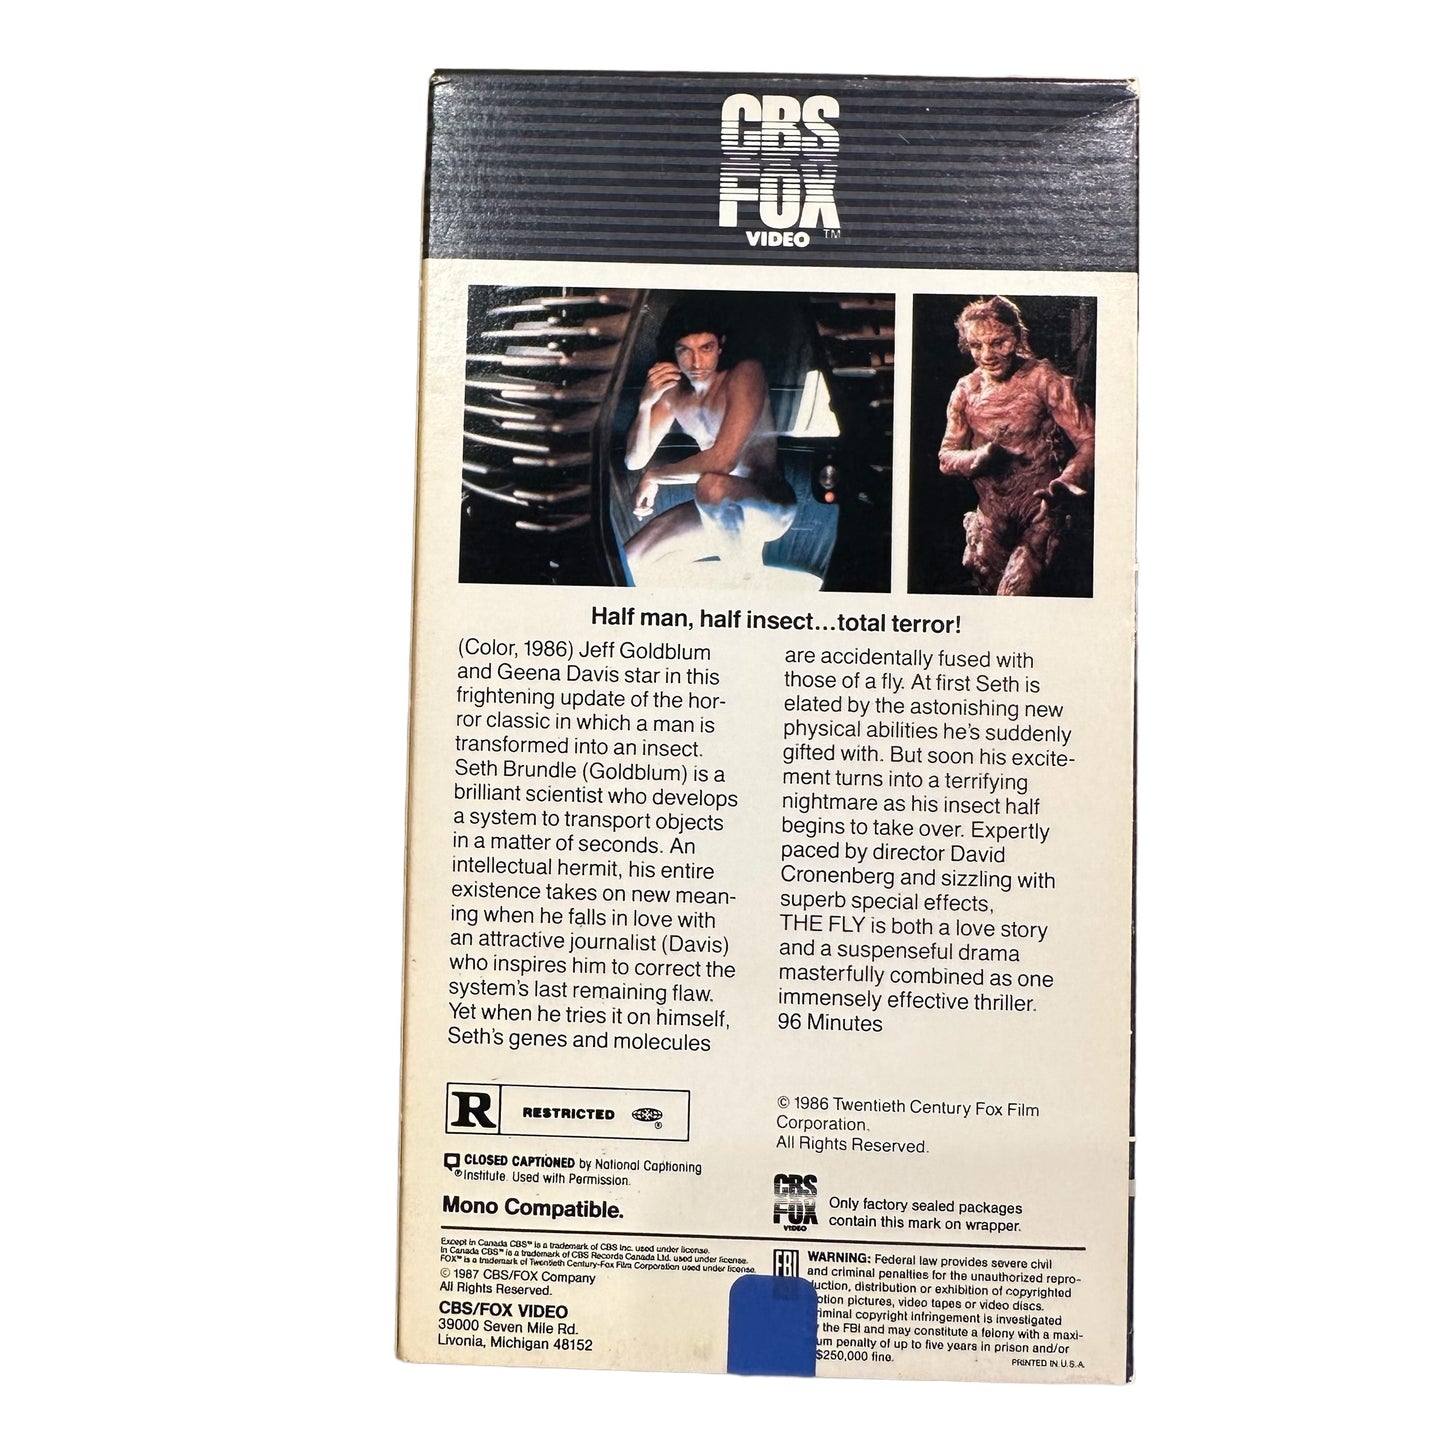 VHS ビデオテープ 輸入版 ザ・フライ The Fly 海外版 USA アメリカ ヴィンテージビデオ 紙ジャケ